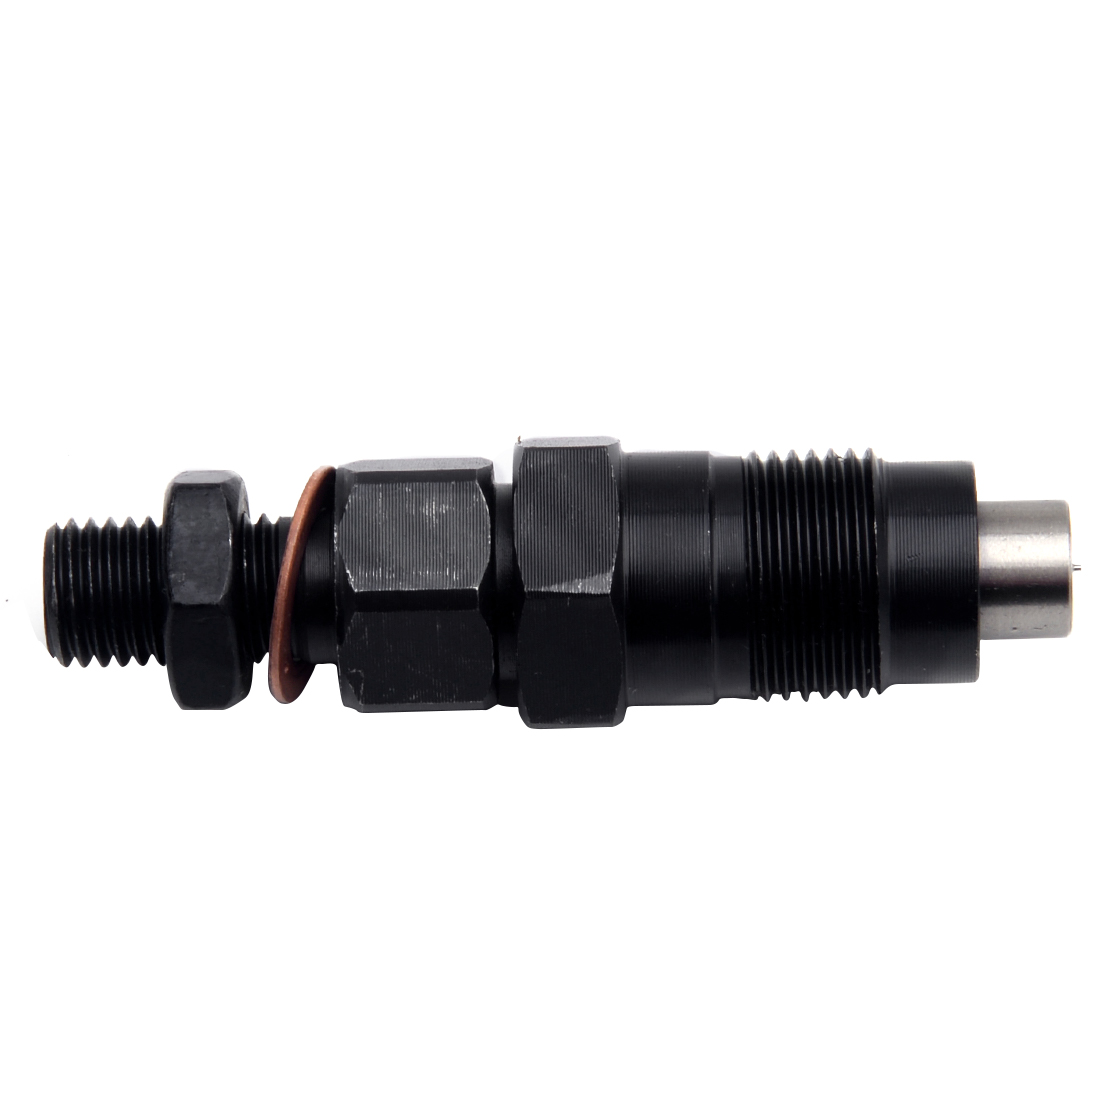 Black Car Fuel Injection Valve Nozzle YM11951553001 Accessories fit for Yanmar 2YM15 3YM30 Engine YM119515-53001